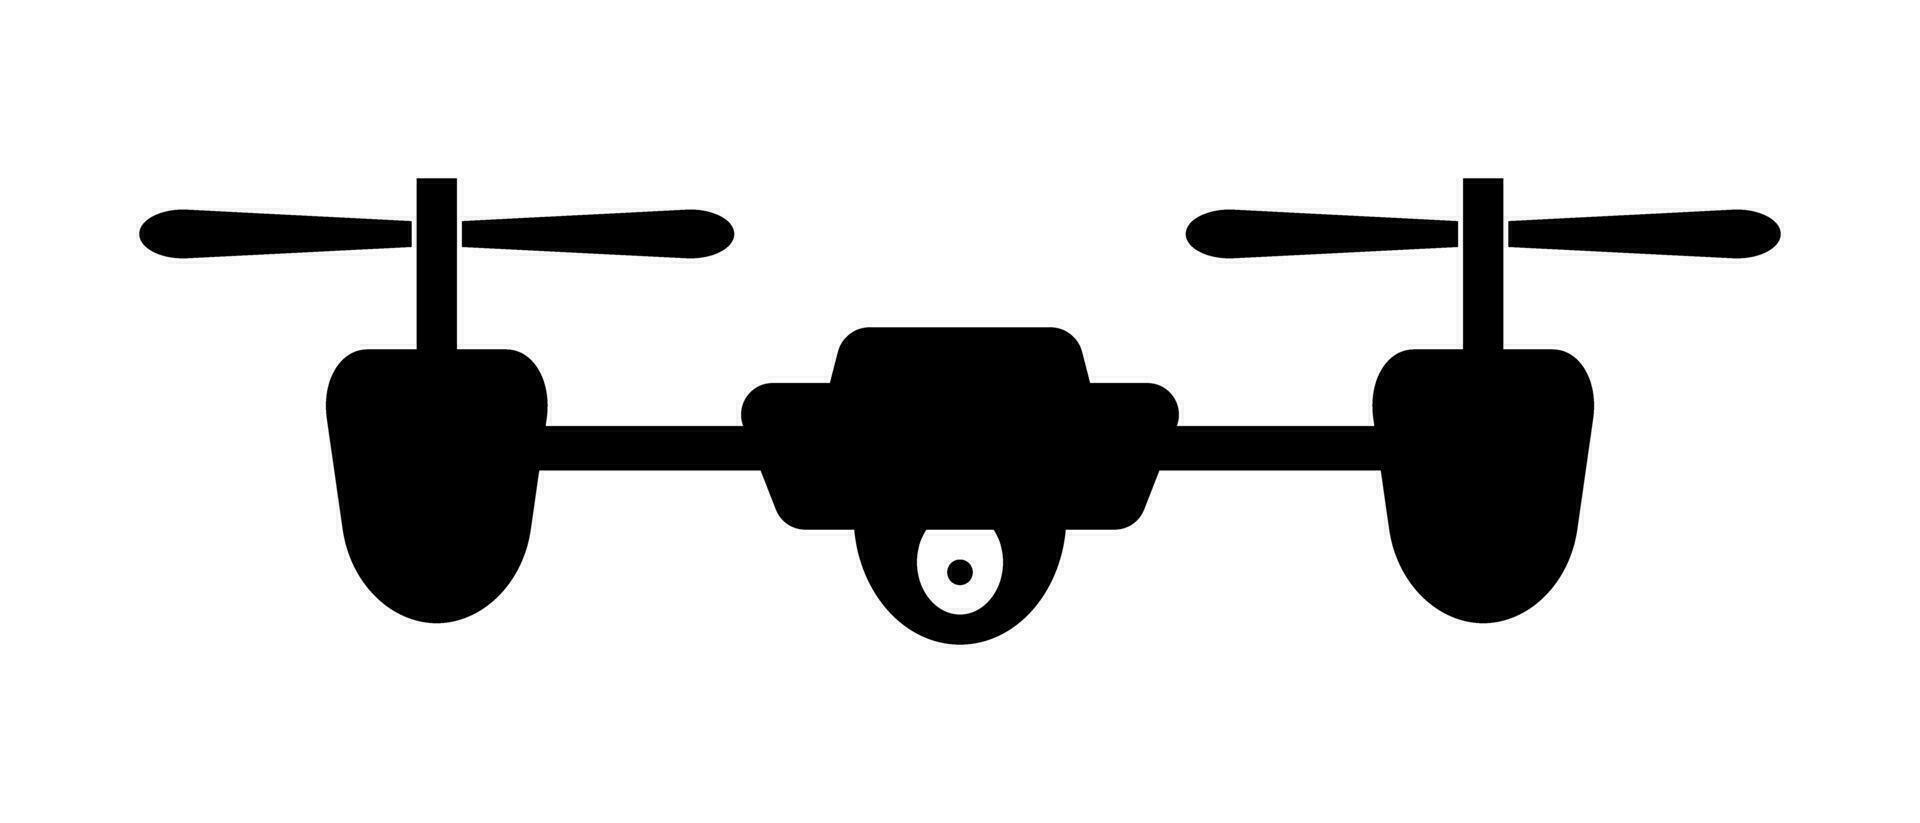 Drohne Silhouette Symbol. Aufklärung Flugzeug. unbemannt Antenne Fahrzeug. Vektor. vektor